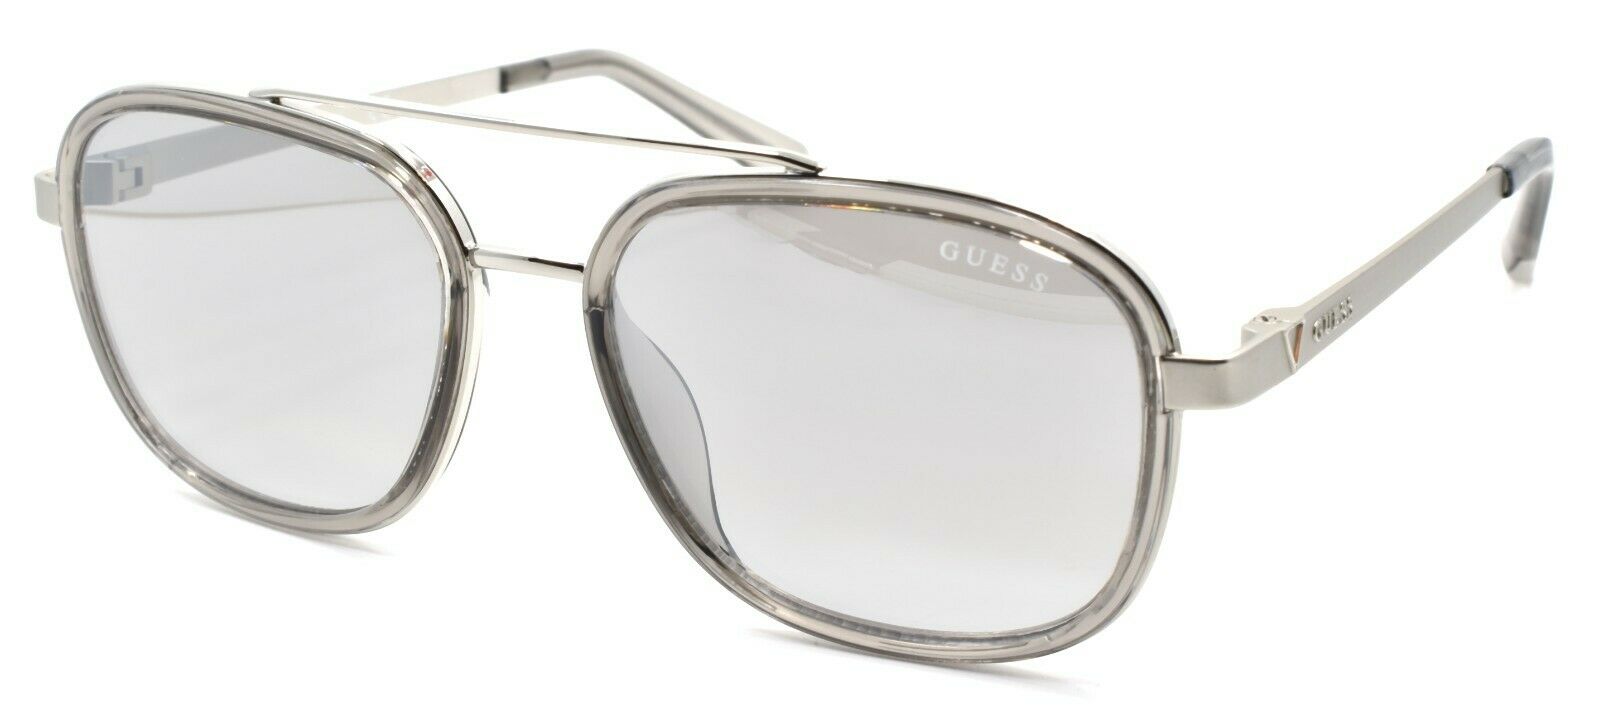 1-GUESS GU6950 20C Men's Sunglasses Aviator 54-17-145 Silver Gray Mirrored + CASE-889214045973-IKSpecs